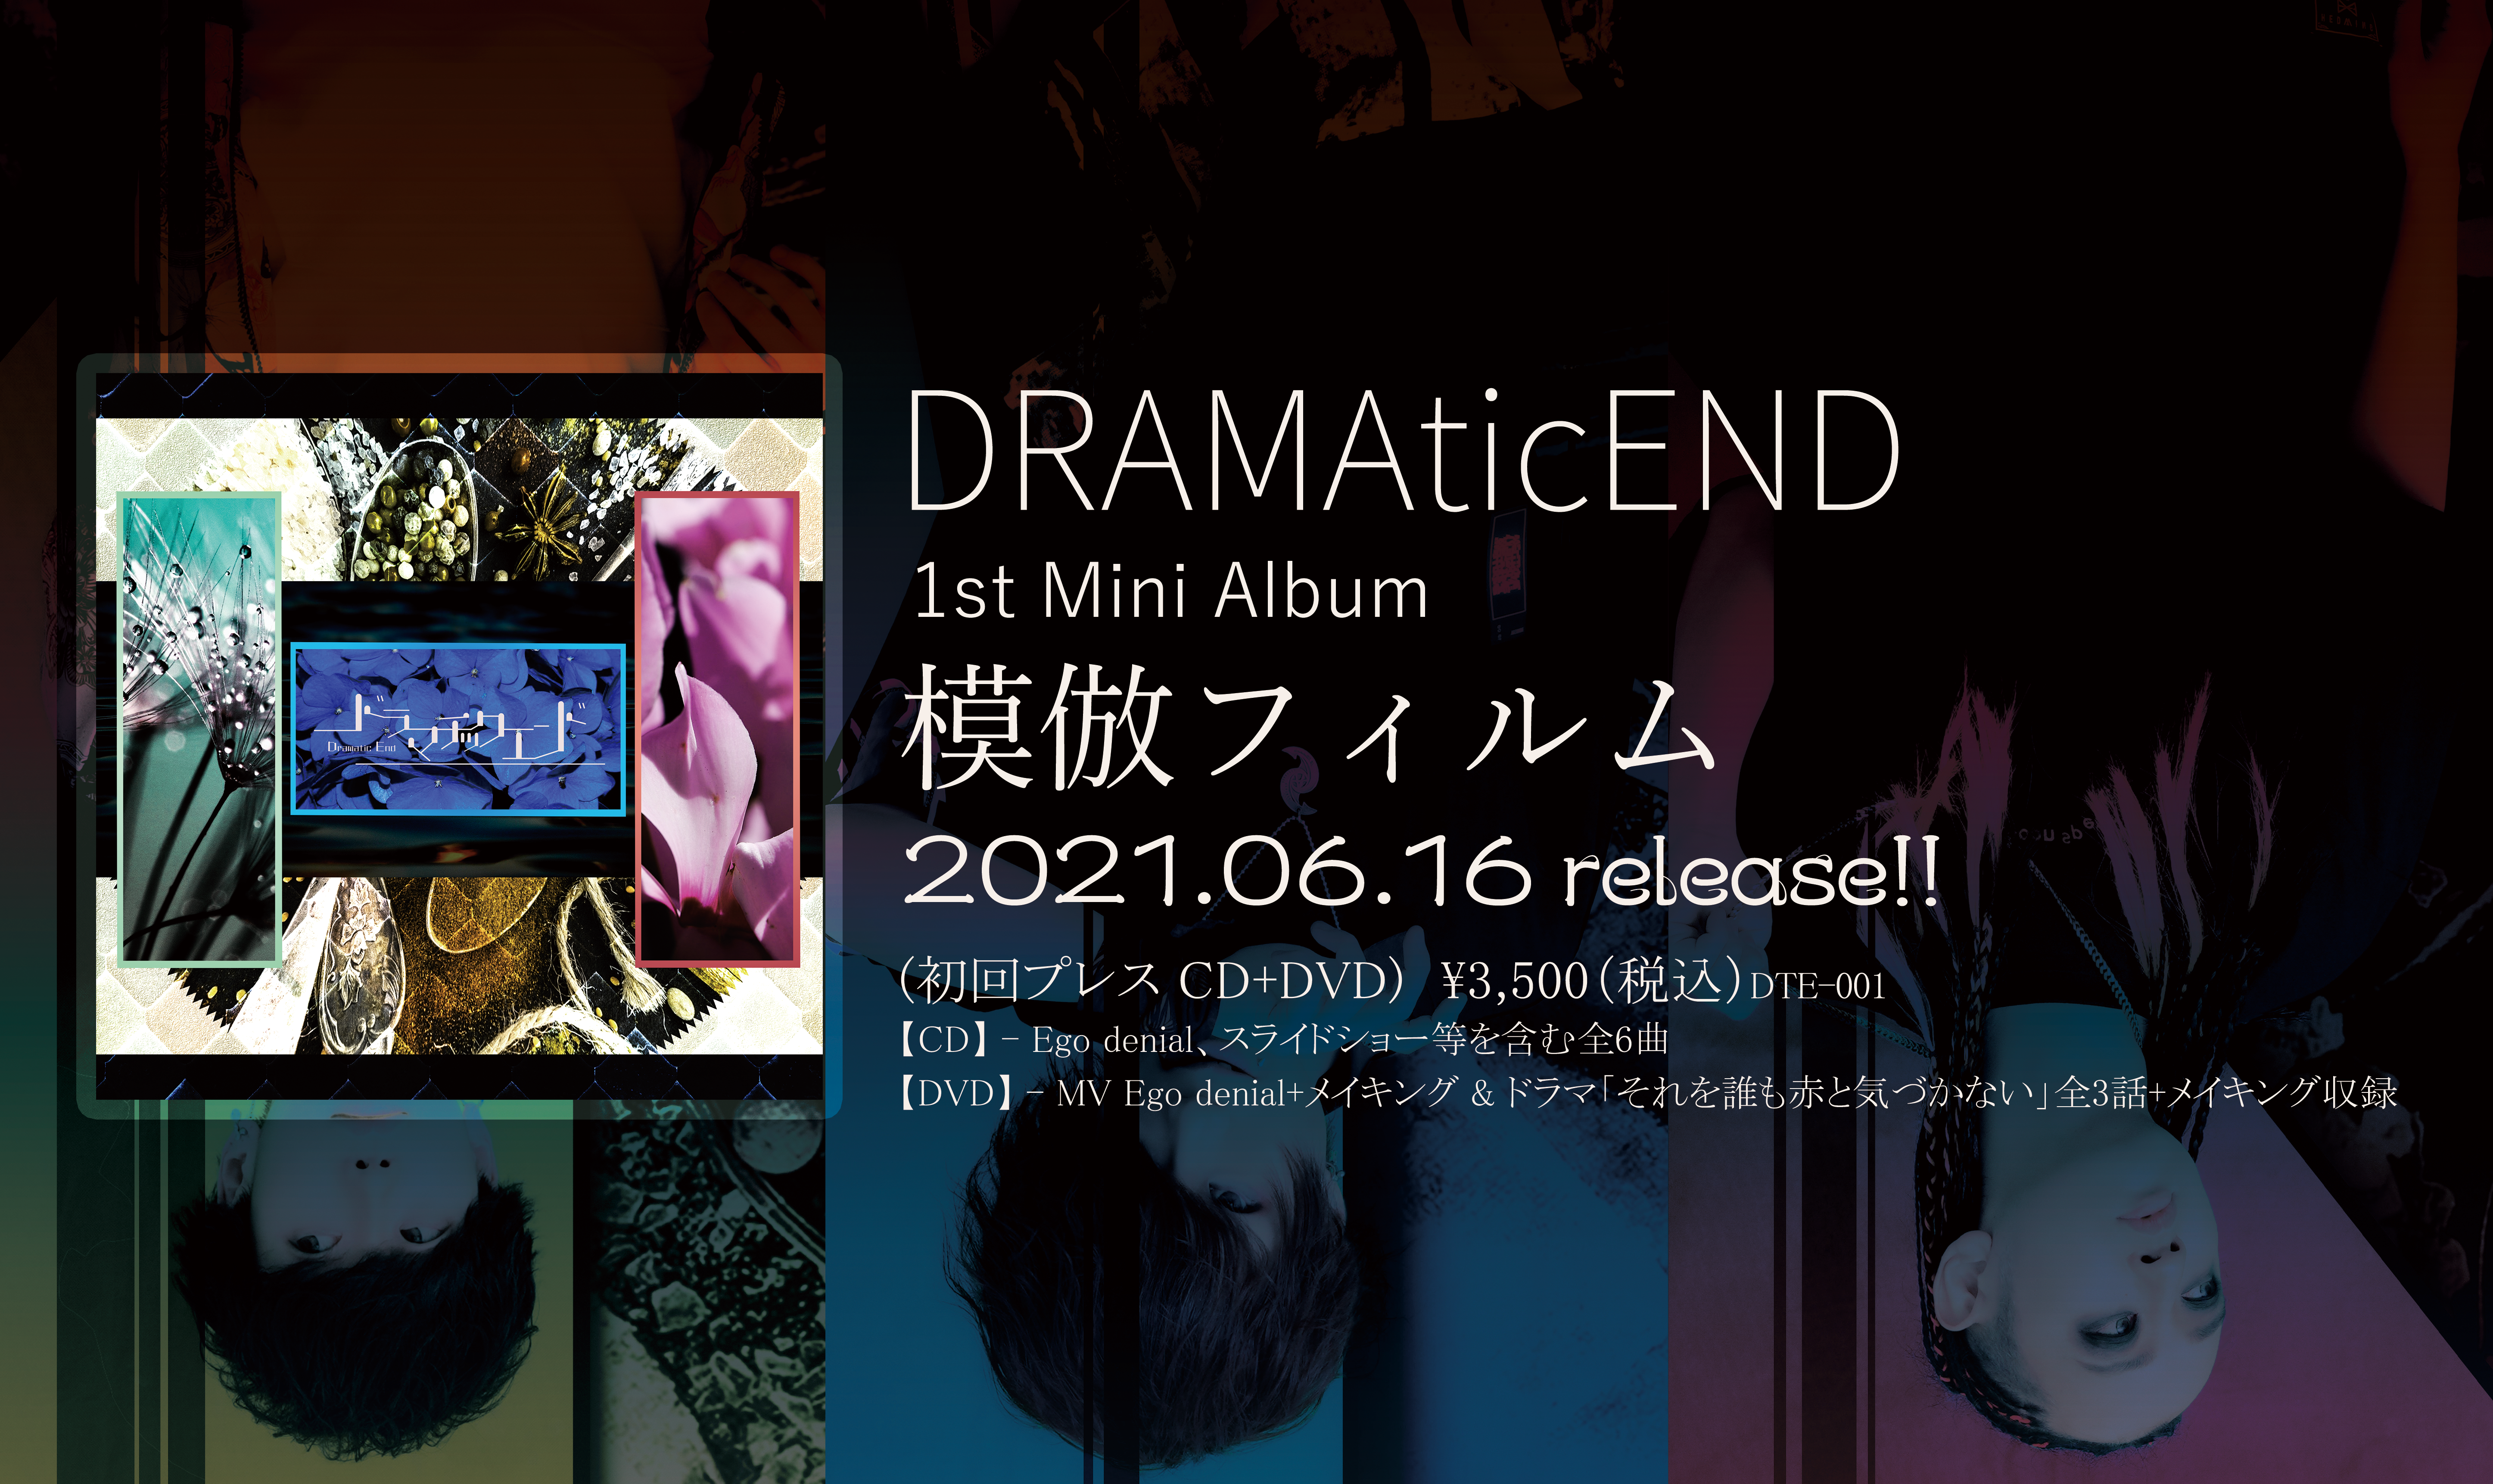 DRAMAticEND 1st Mini Album「模倣フィルム」最新情報&試聴映像を公開!!